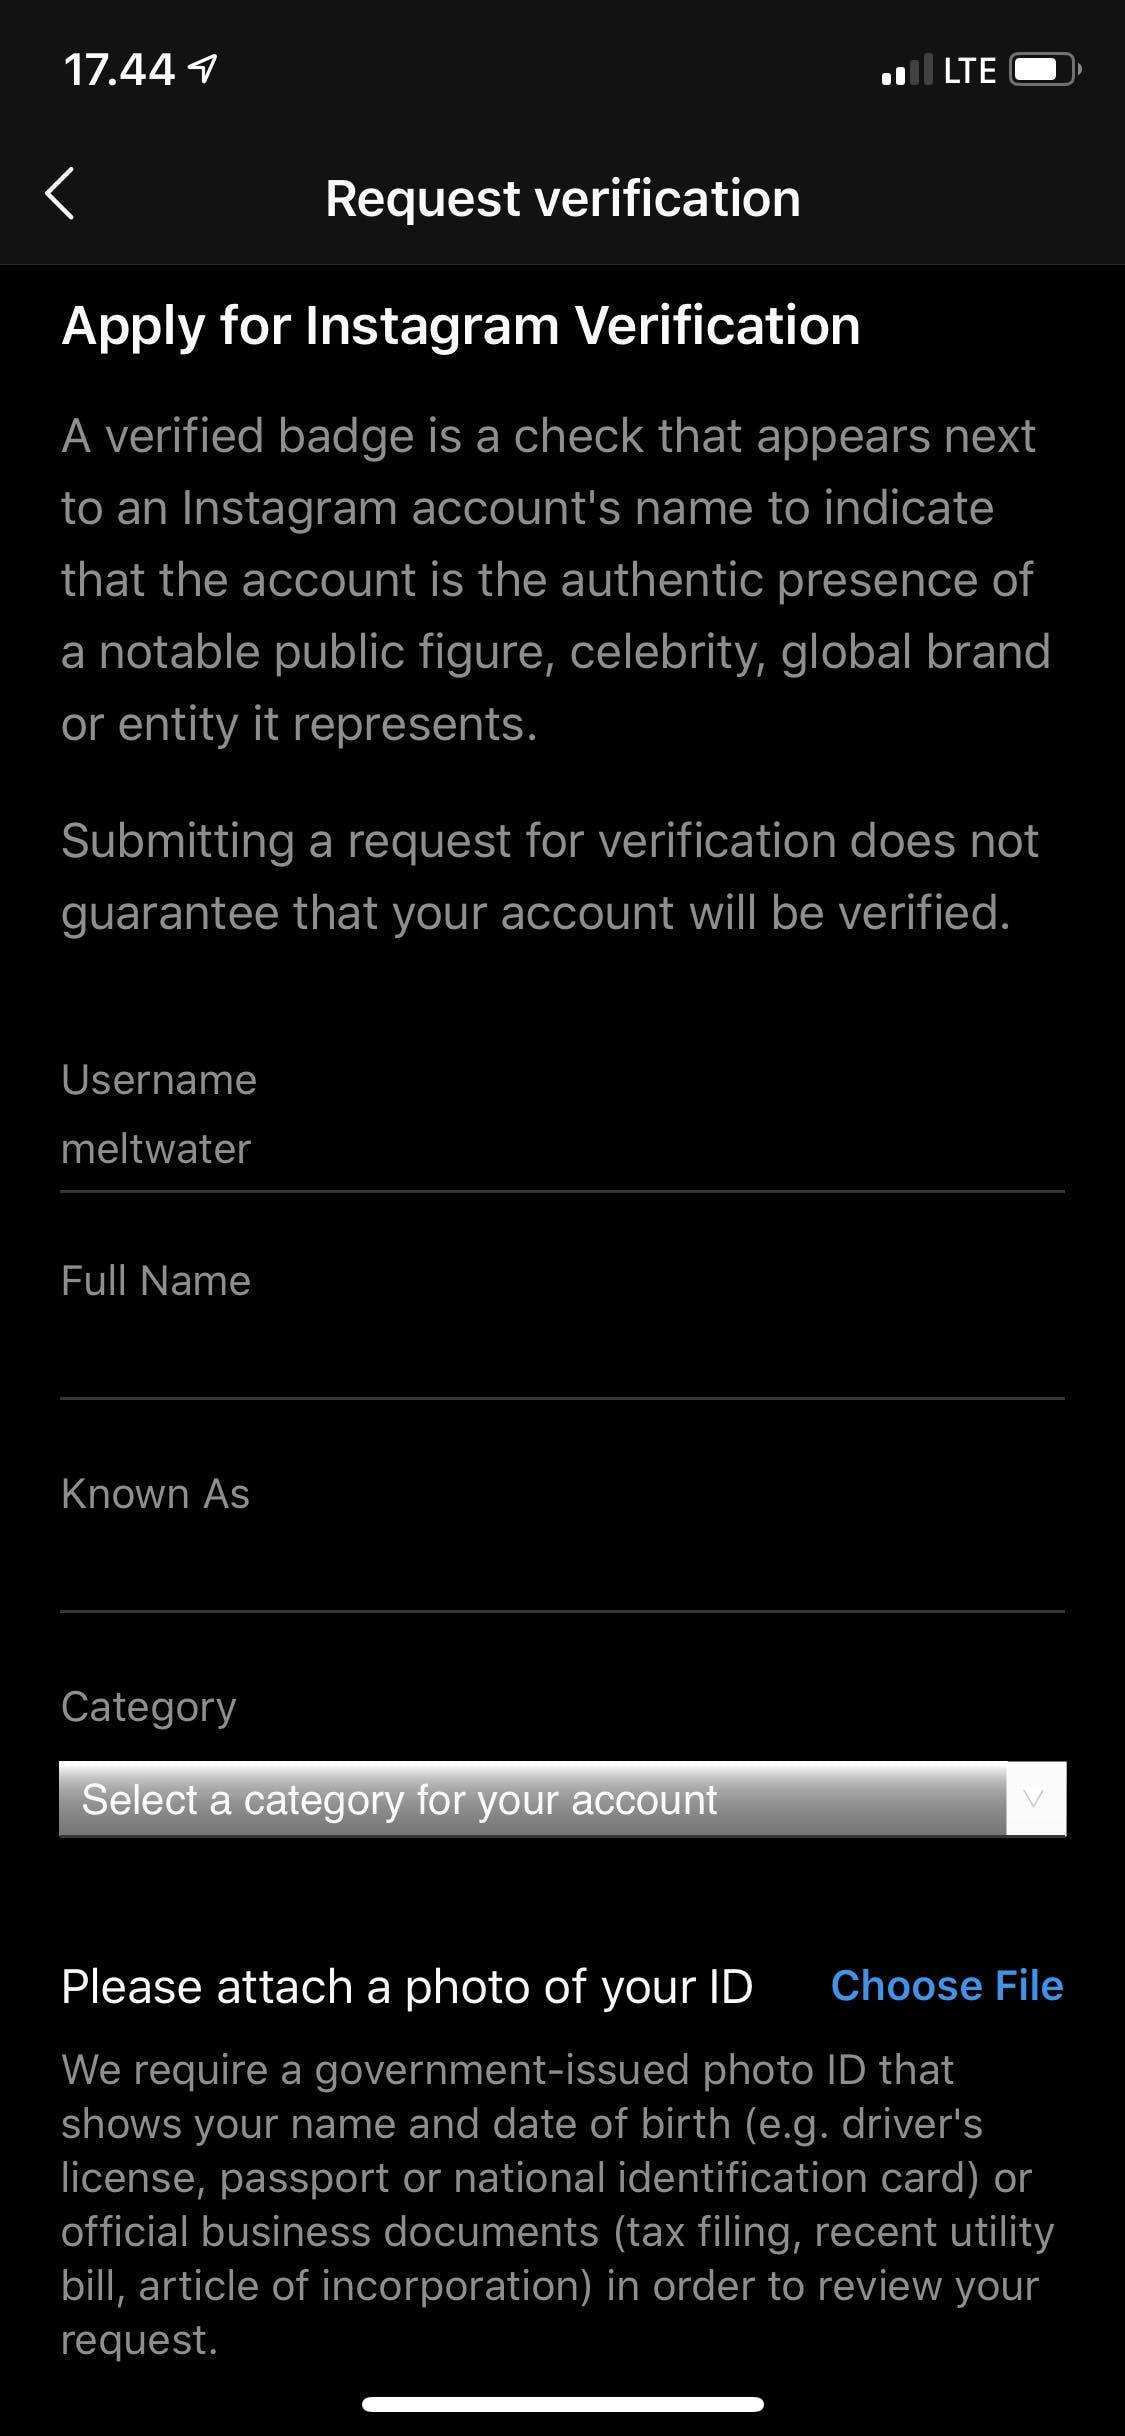 A screenshot of the Instagram verification application